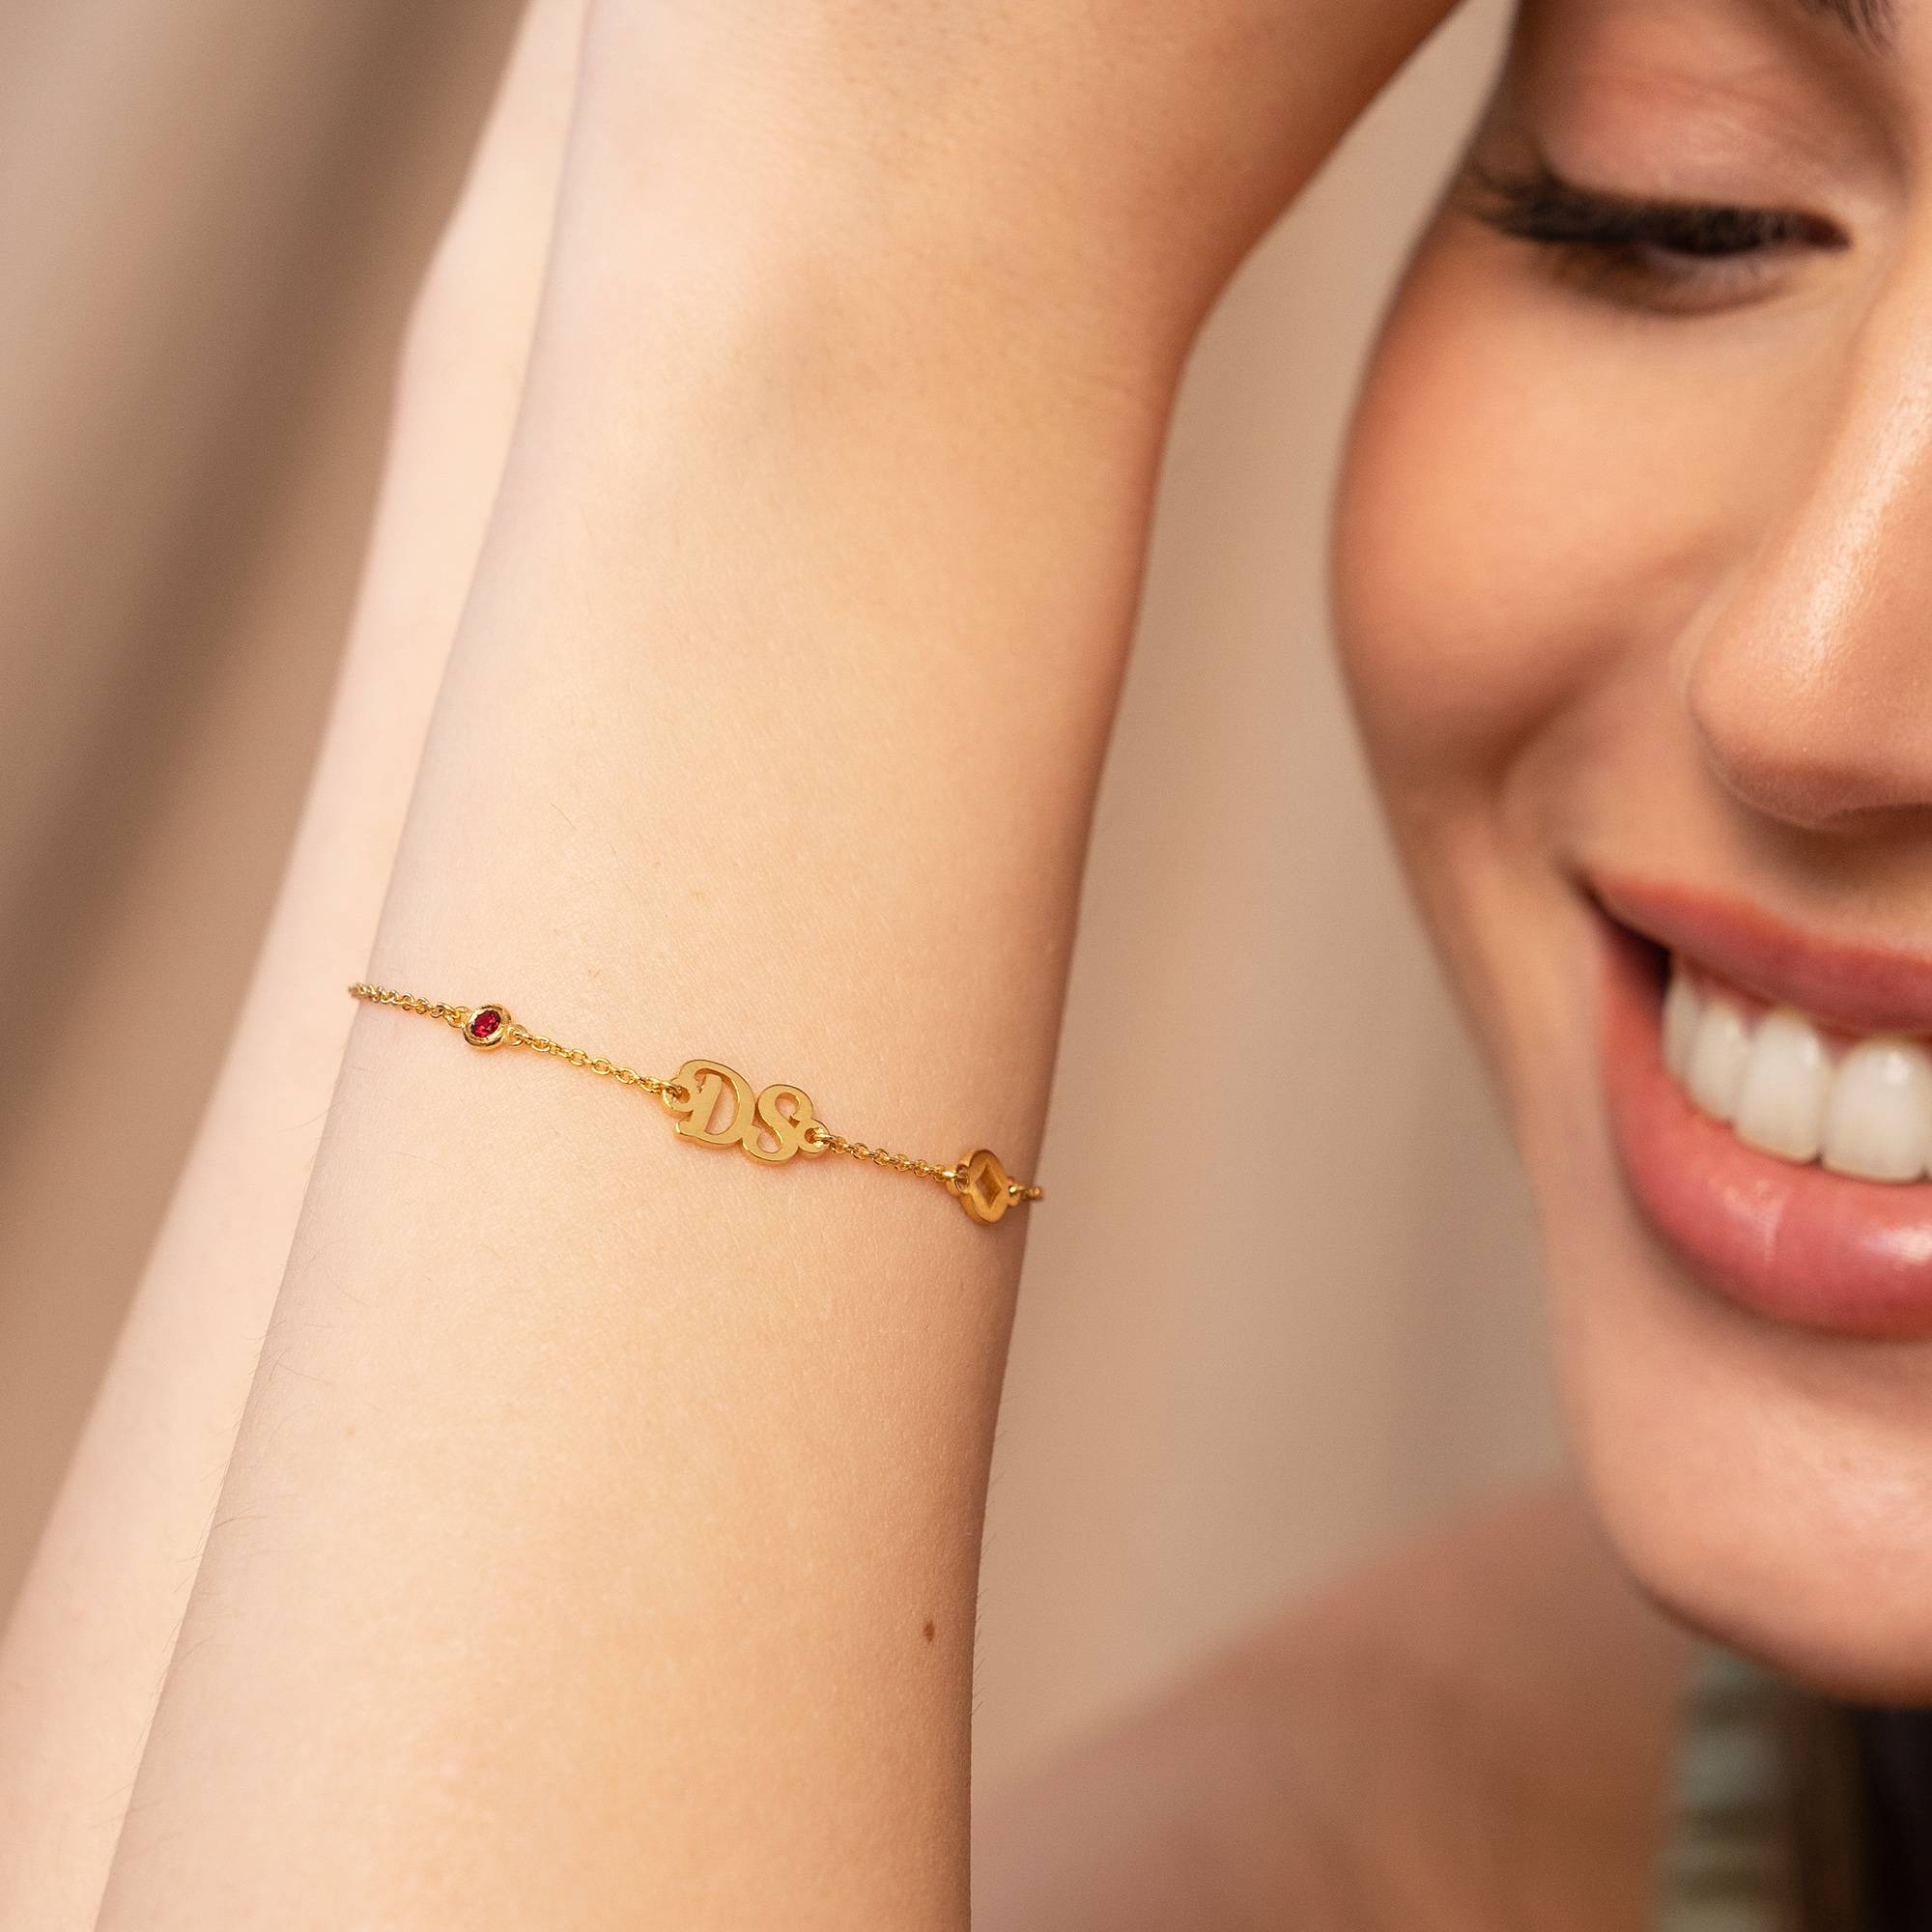 Bridget Star Initial Bracelet/Anklet with Gemstone in 18K Gold Vermeil-3 product photo